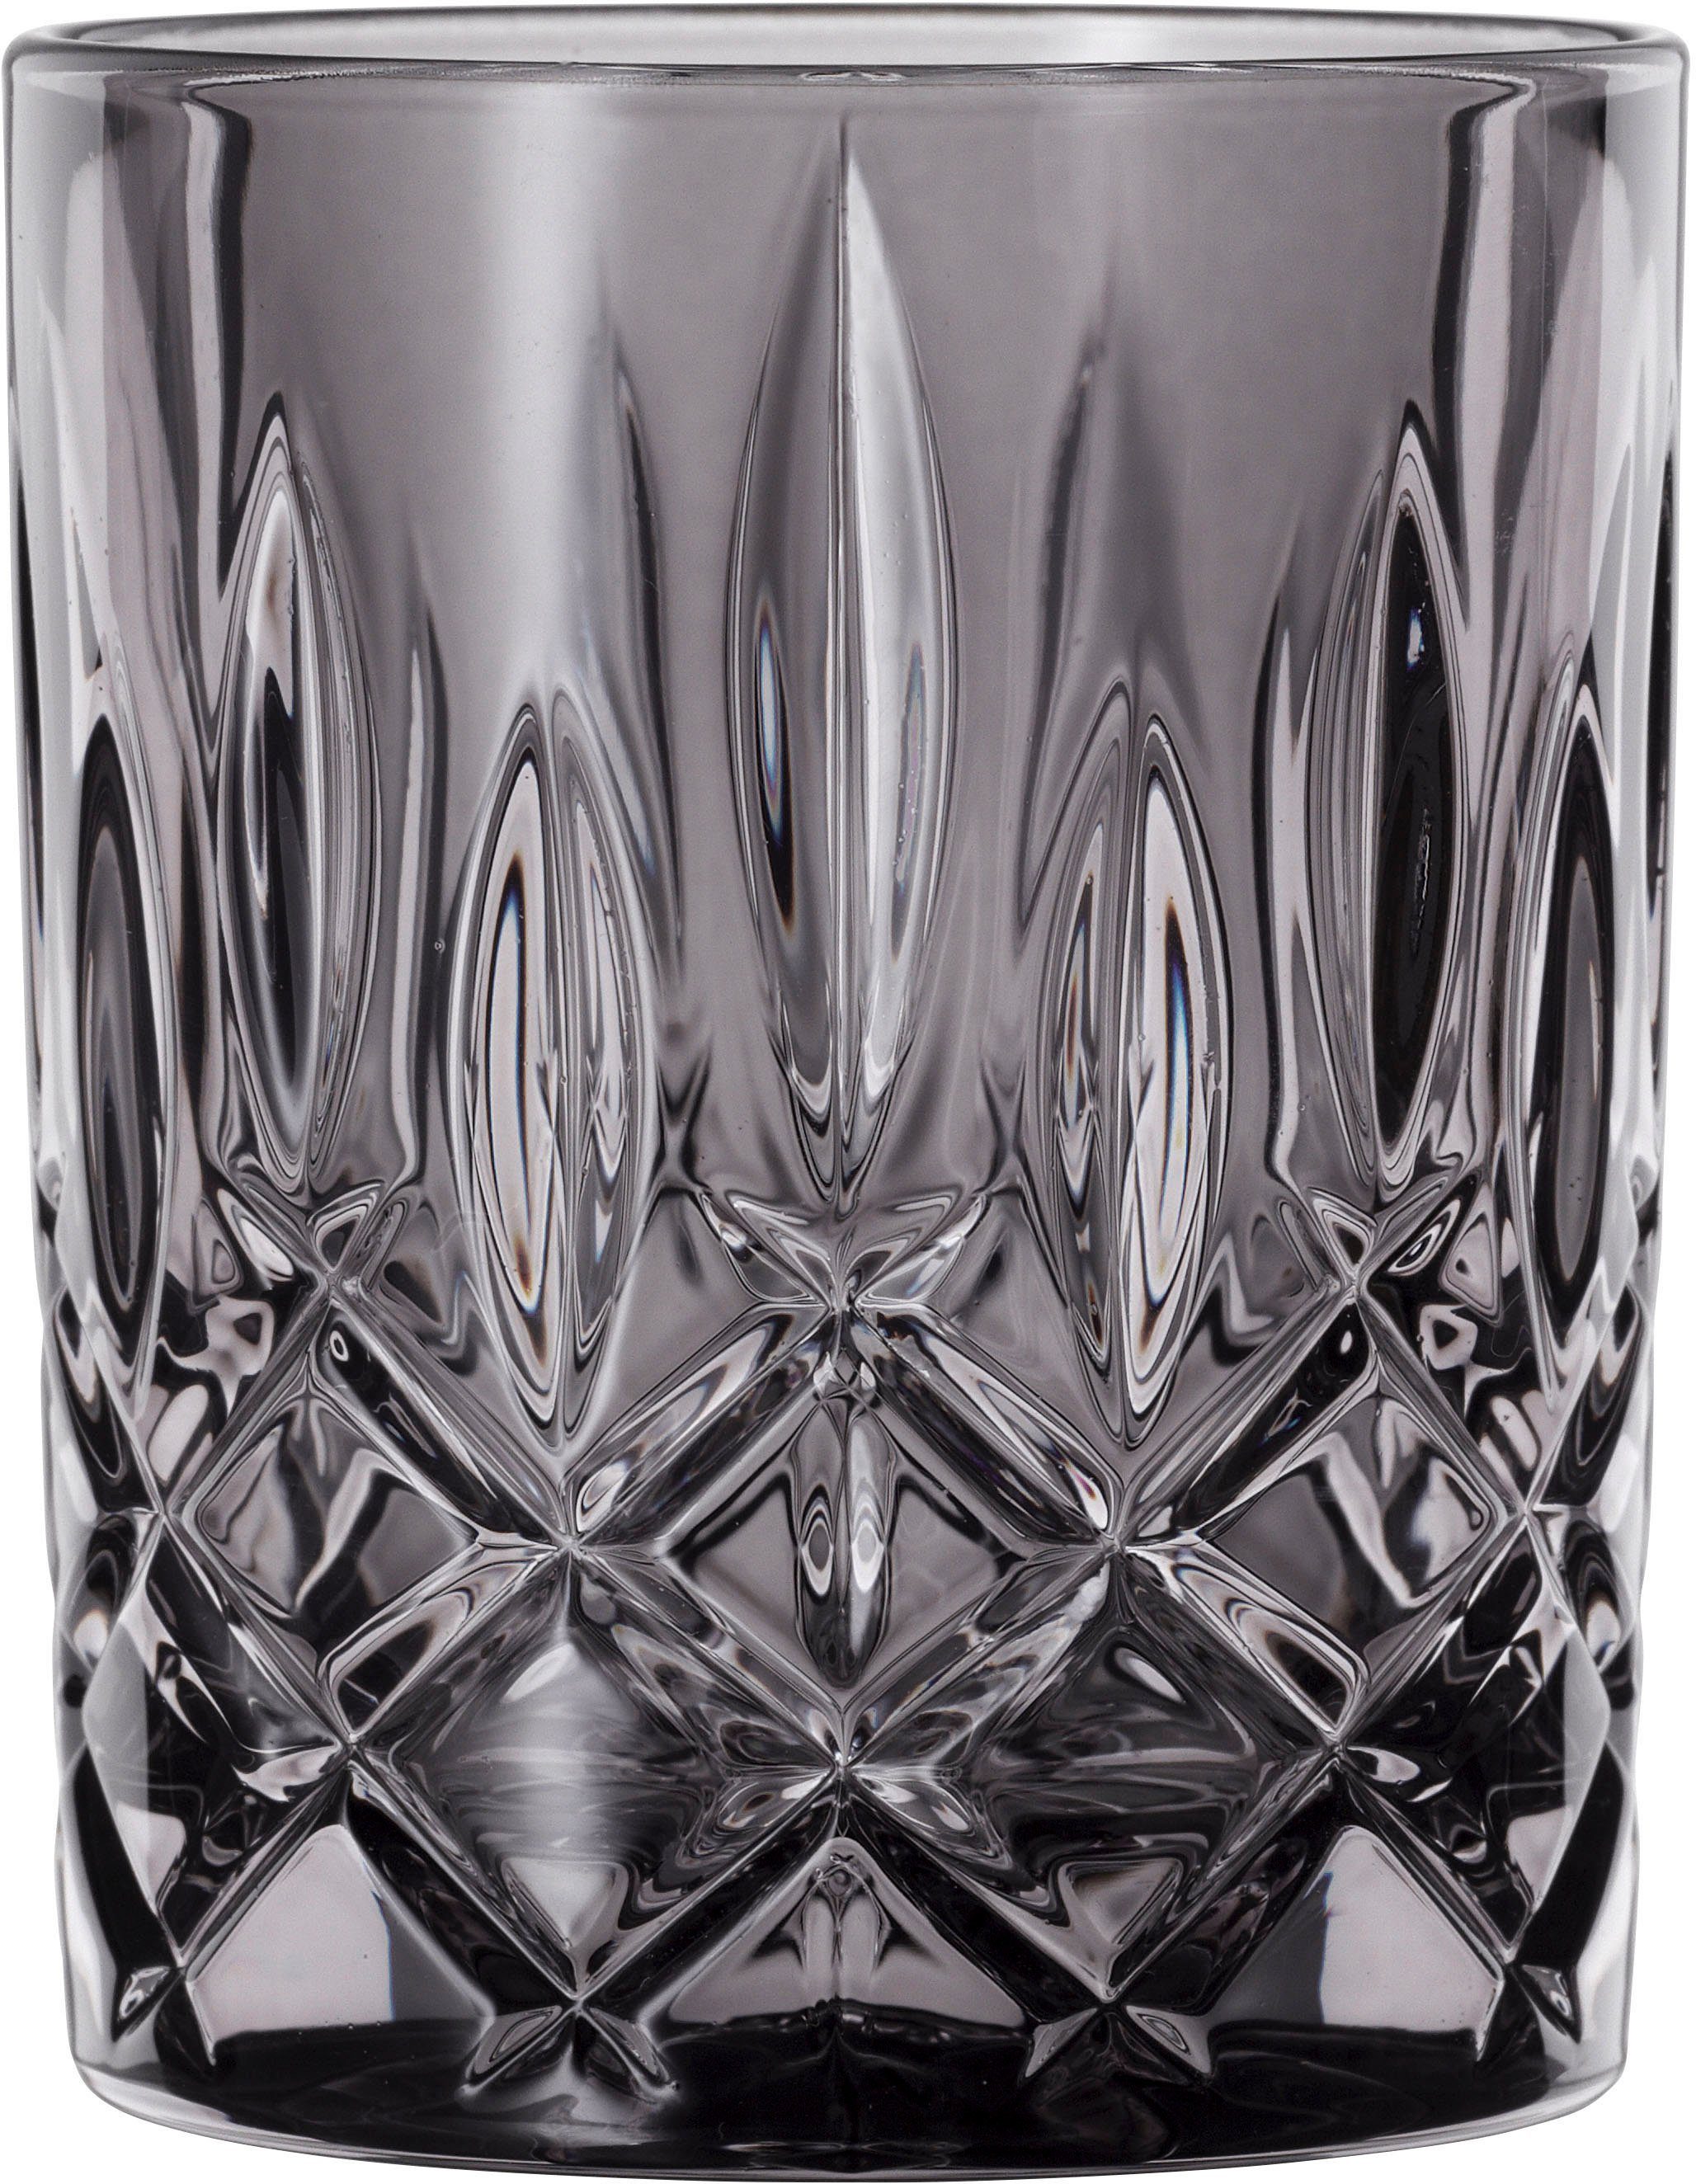 Nachtmann Whiskyglas Noblesse, Kristallglas, Made in Germany, 295 ml, 2-teilig smoke